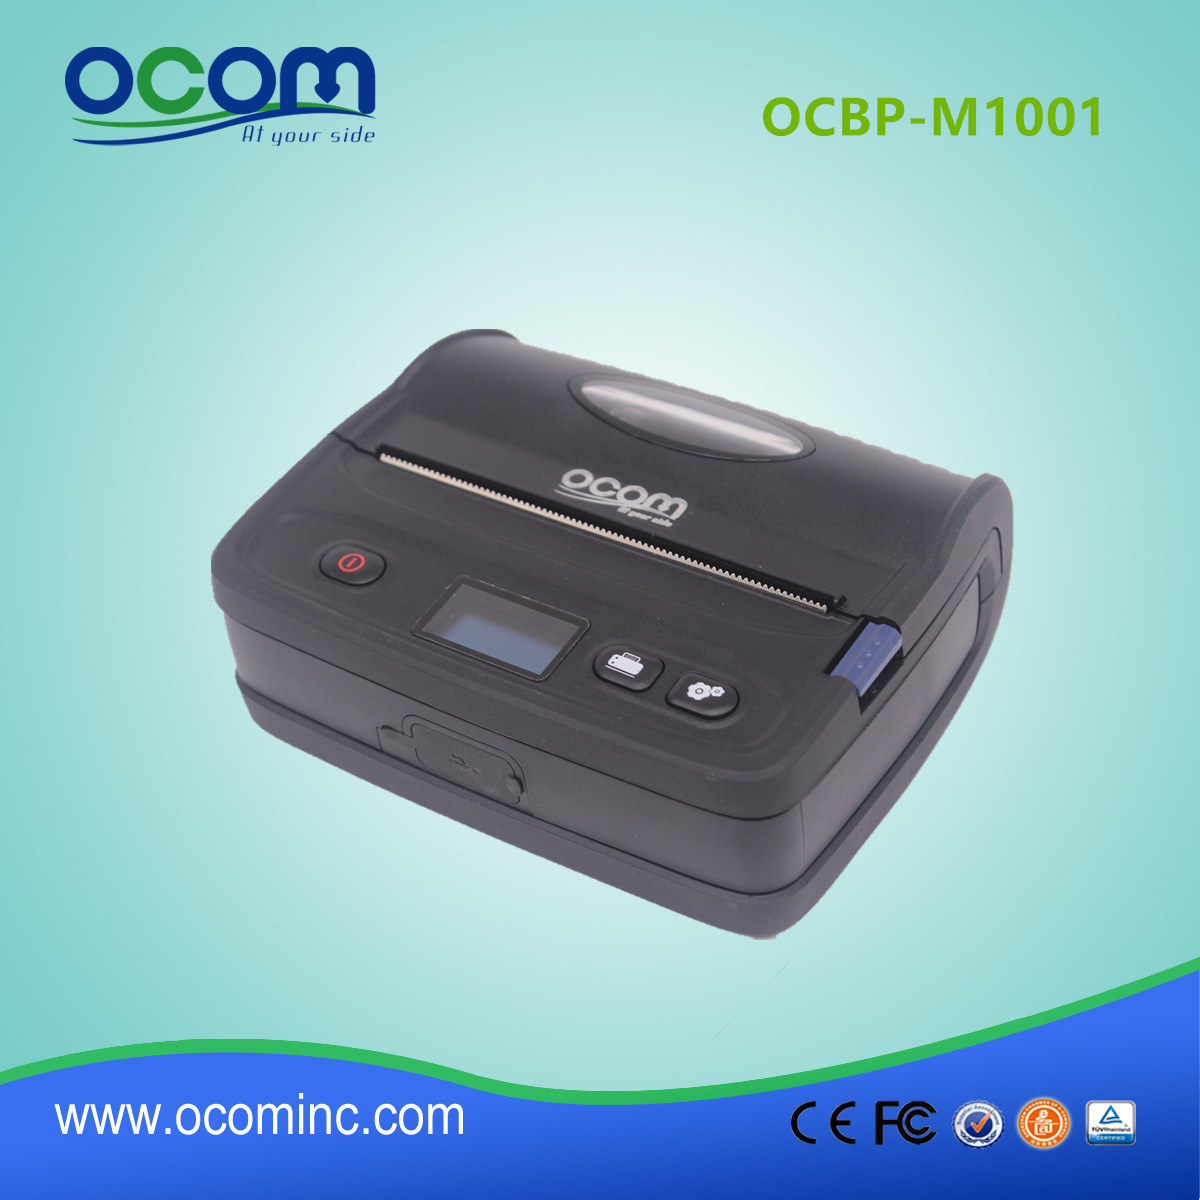 OCBP-M1001 Wireless Mobile Portable Bluetooth Barcode Label Printer